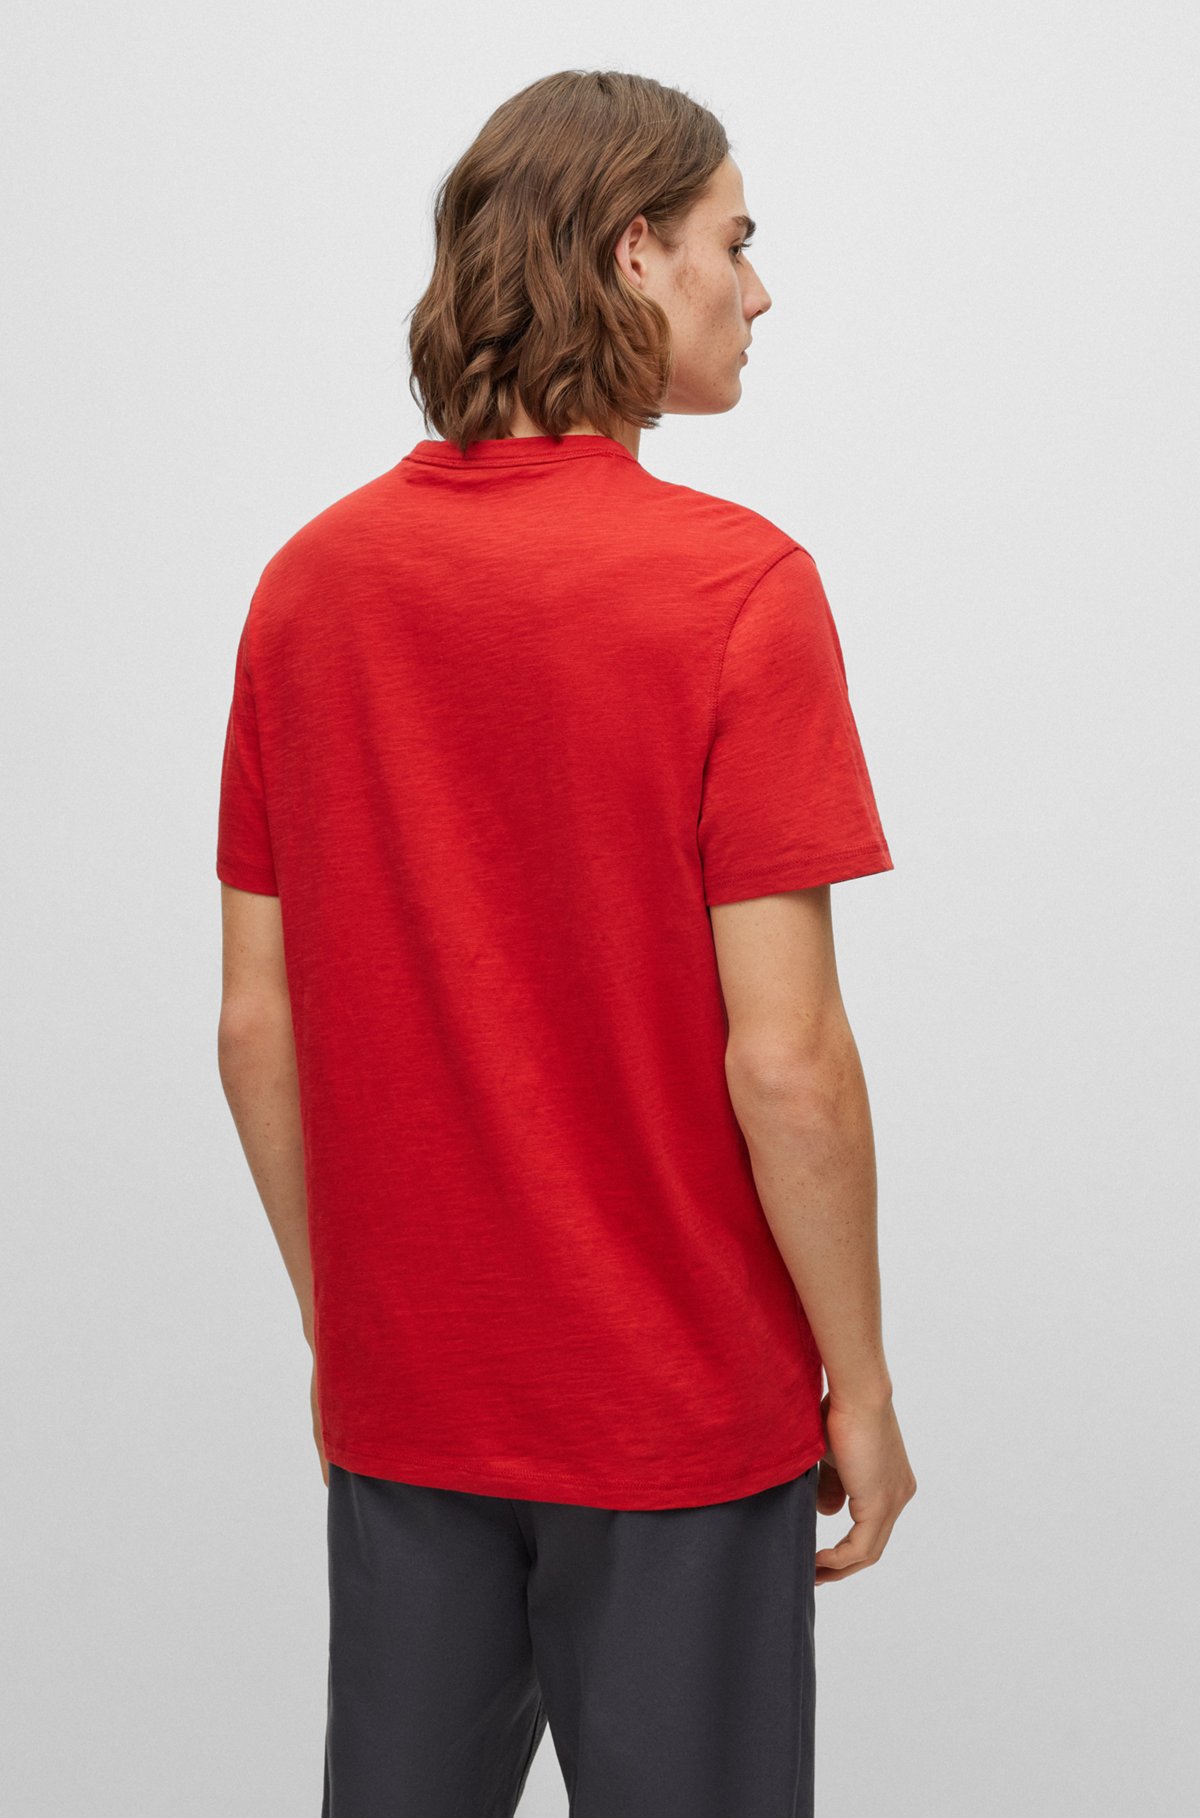 BOSS - Cotton-jersey regular-fit T-shirt with logo patch